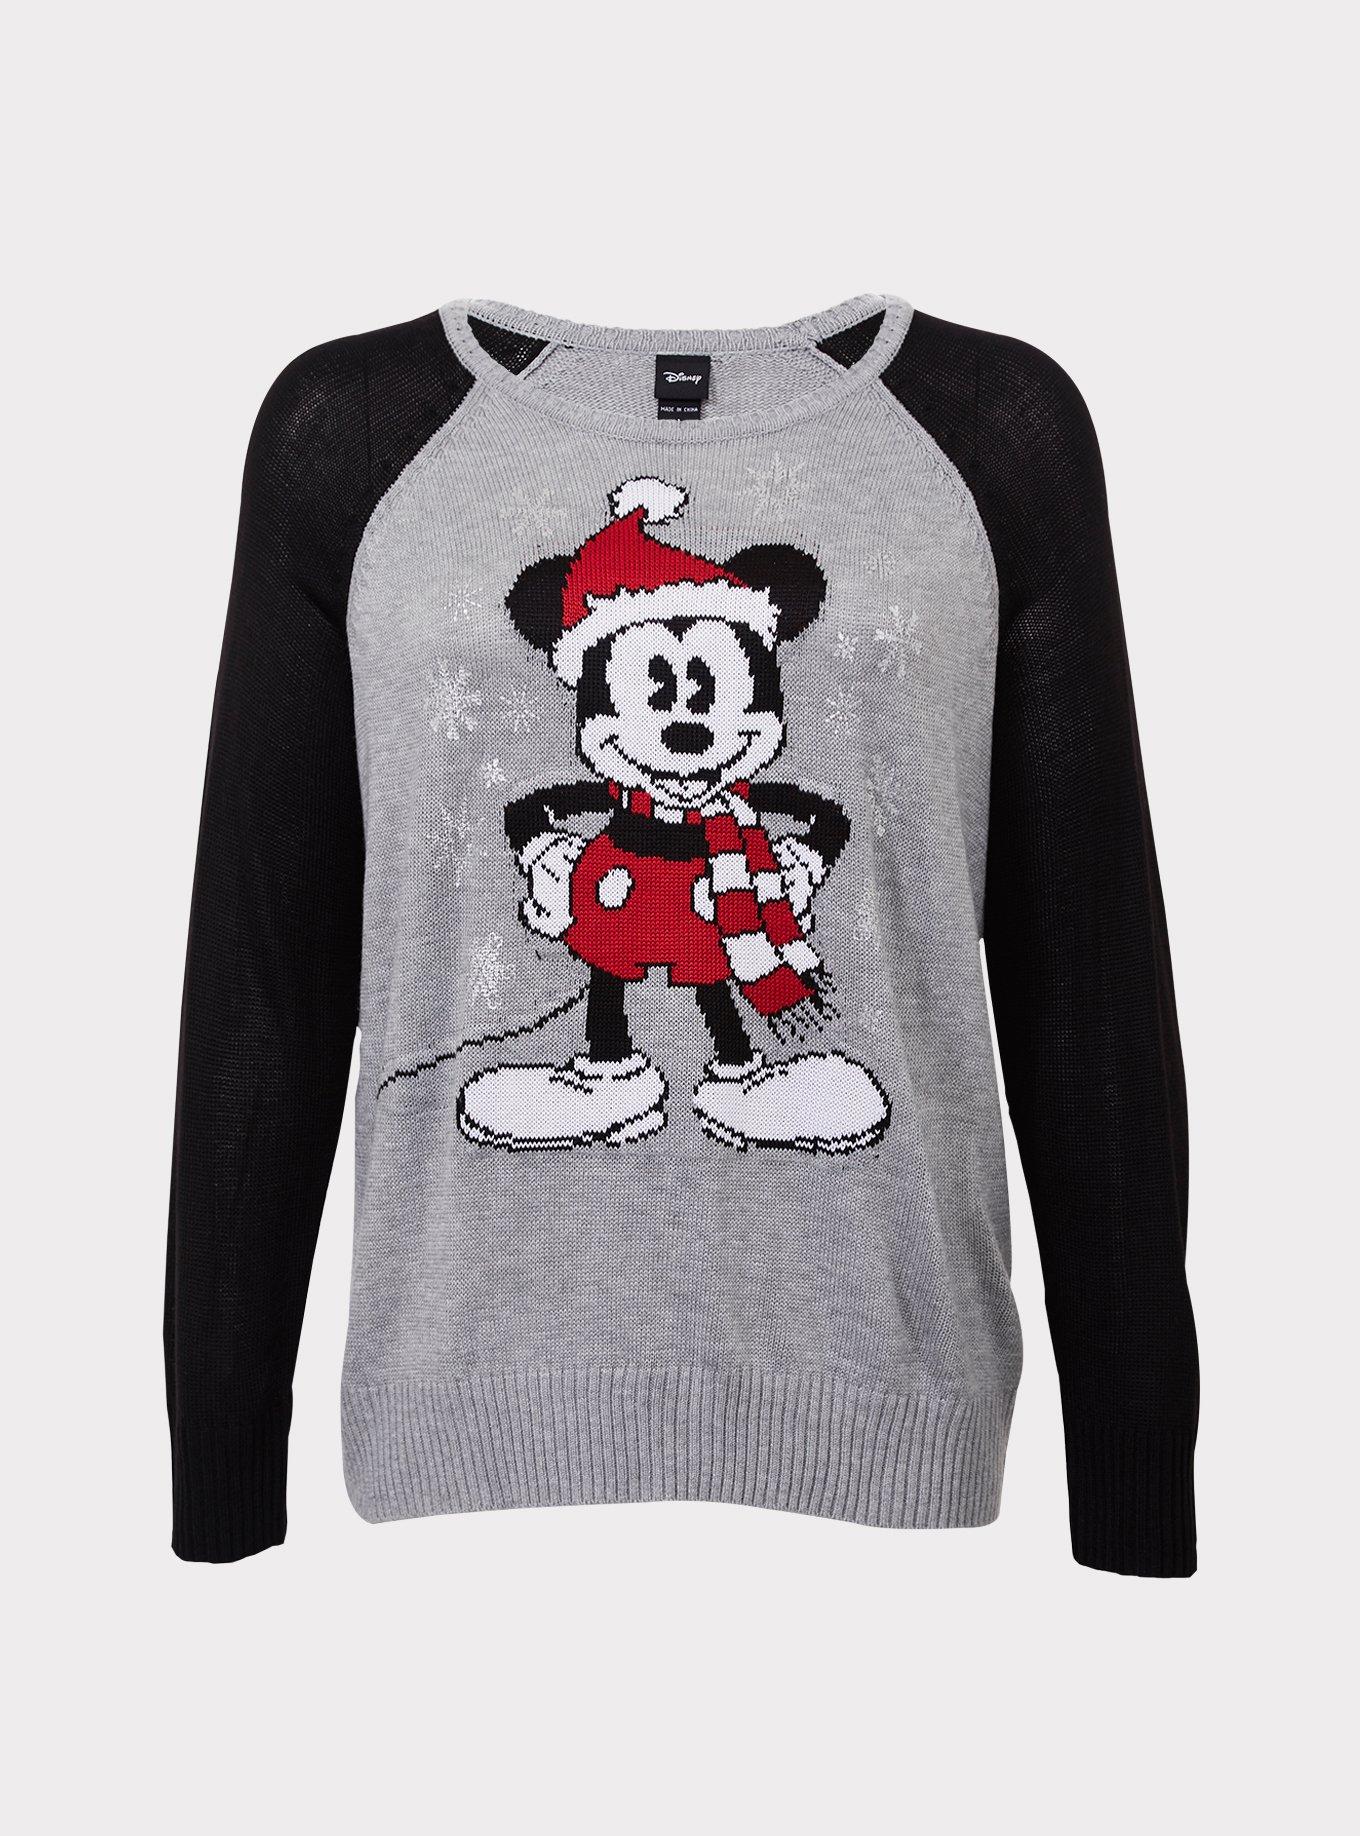 Disney Womens Plus Size T-Shirt Minnie Mouse Print (Heather Grey